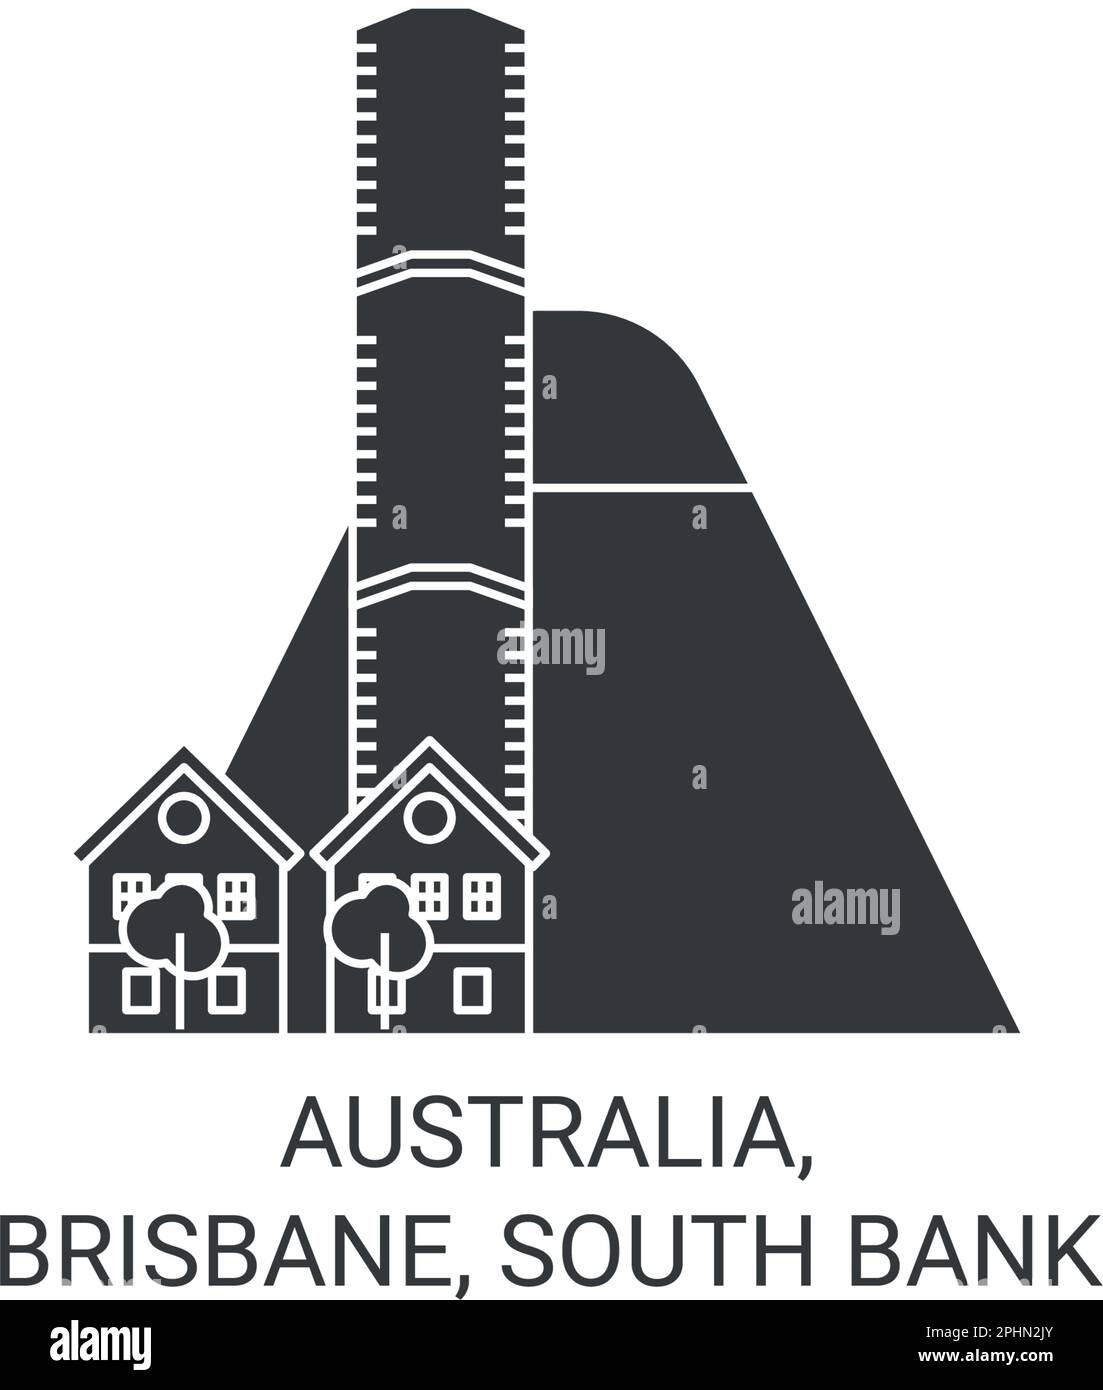 Australia, Brisbane, South Bank travel landmark vector illustration Stock Vector